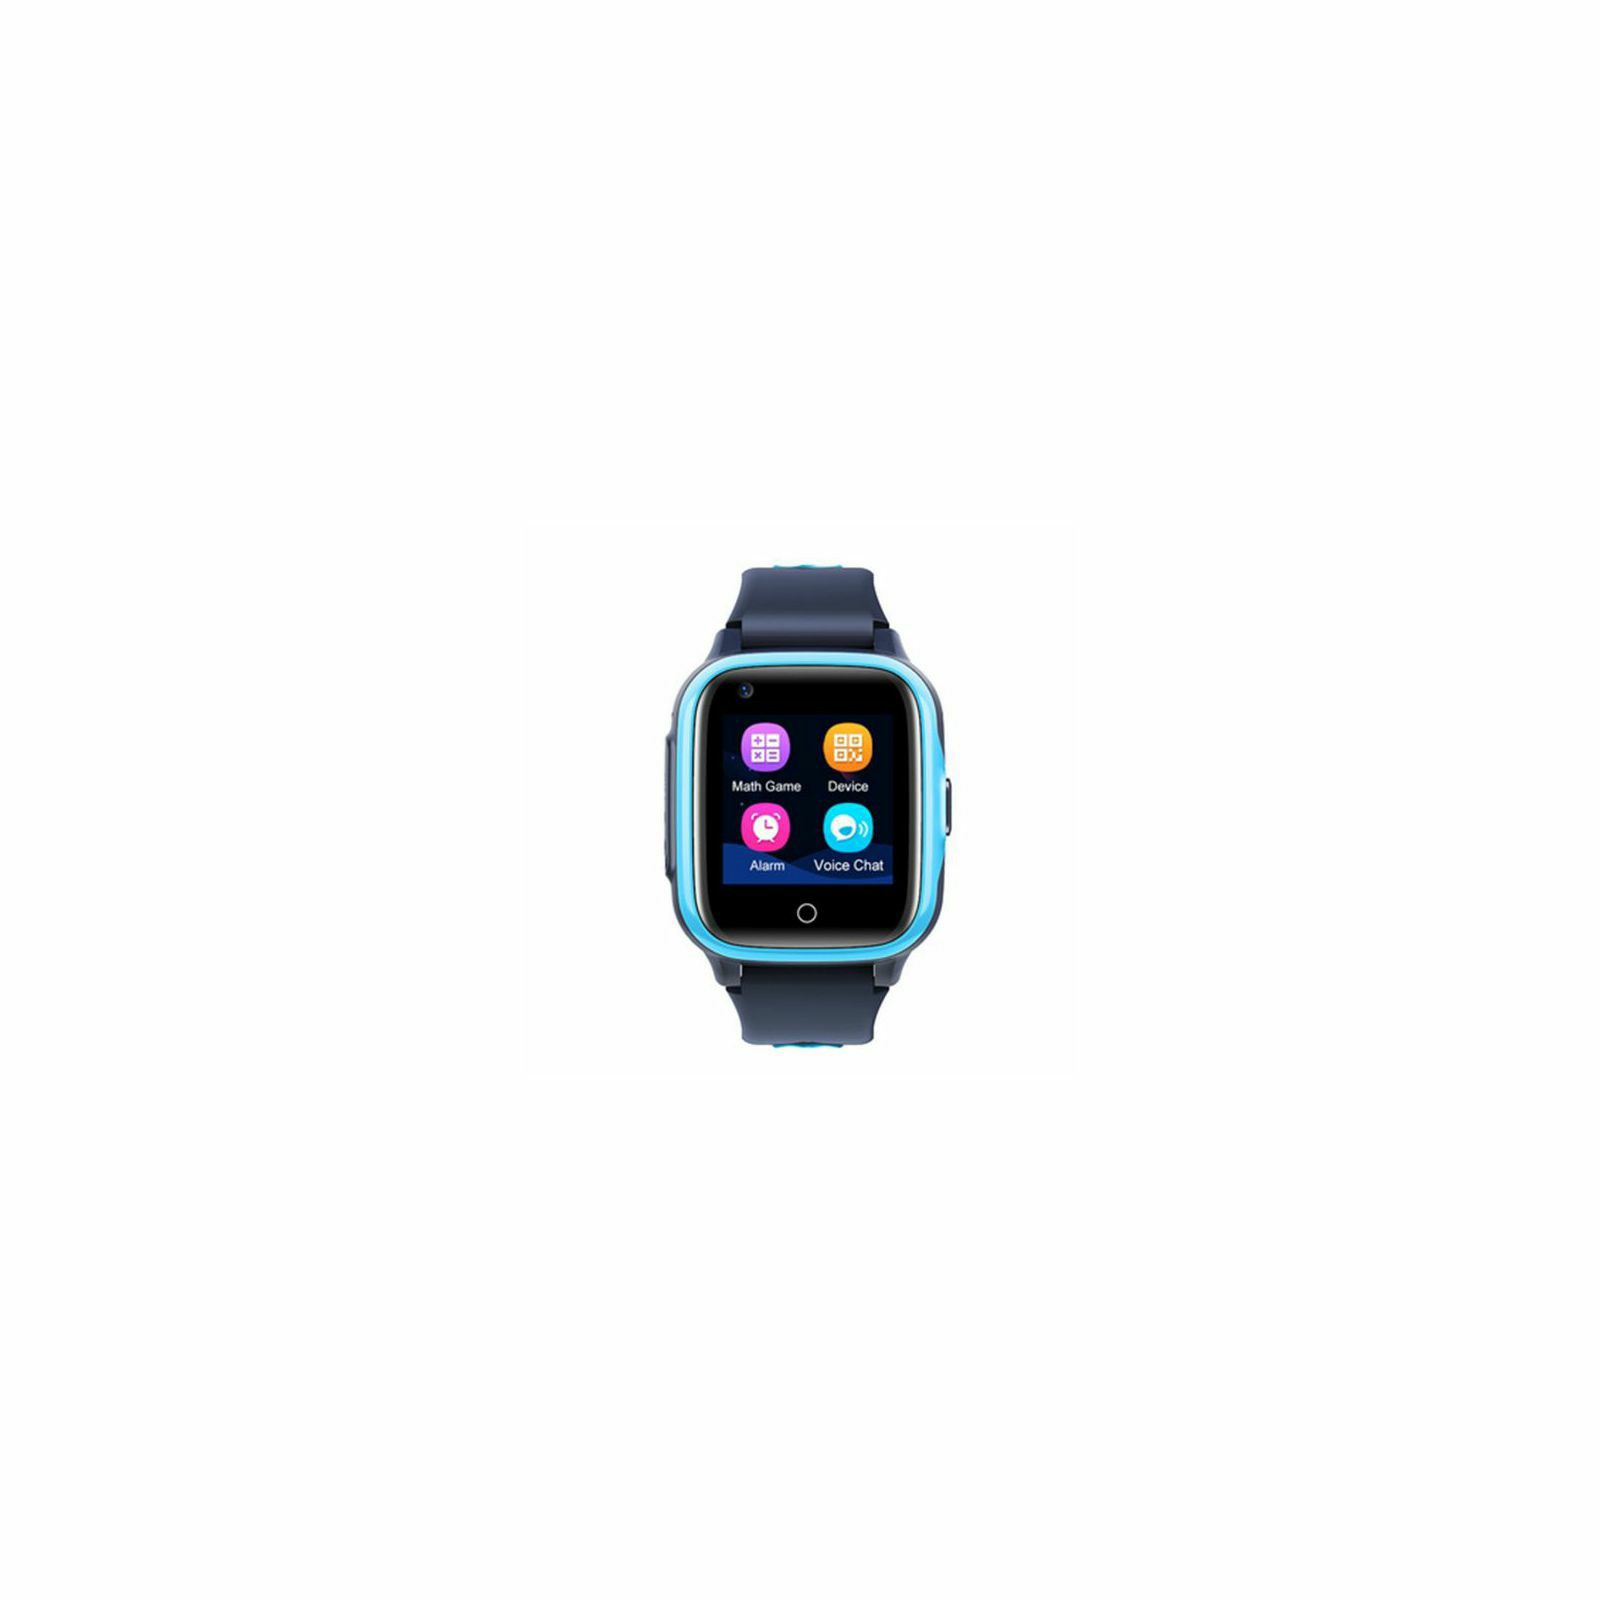 moye-bambino-4g-smart-watch-black-blue-8605042605644_45204.jpg